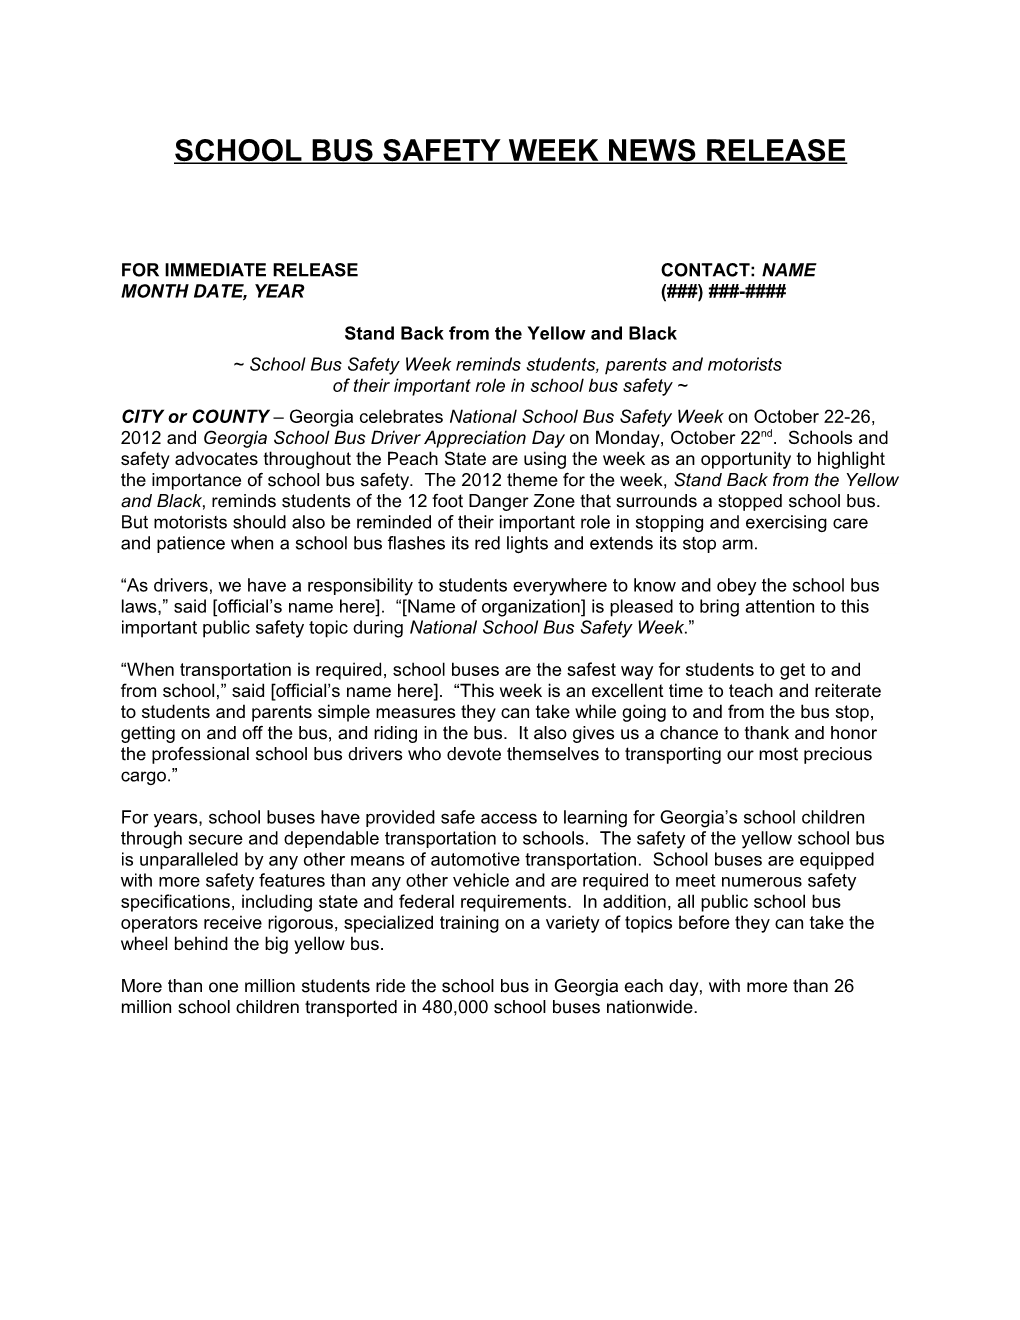 School Bus Safety Week News Release